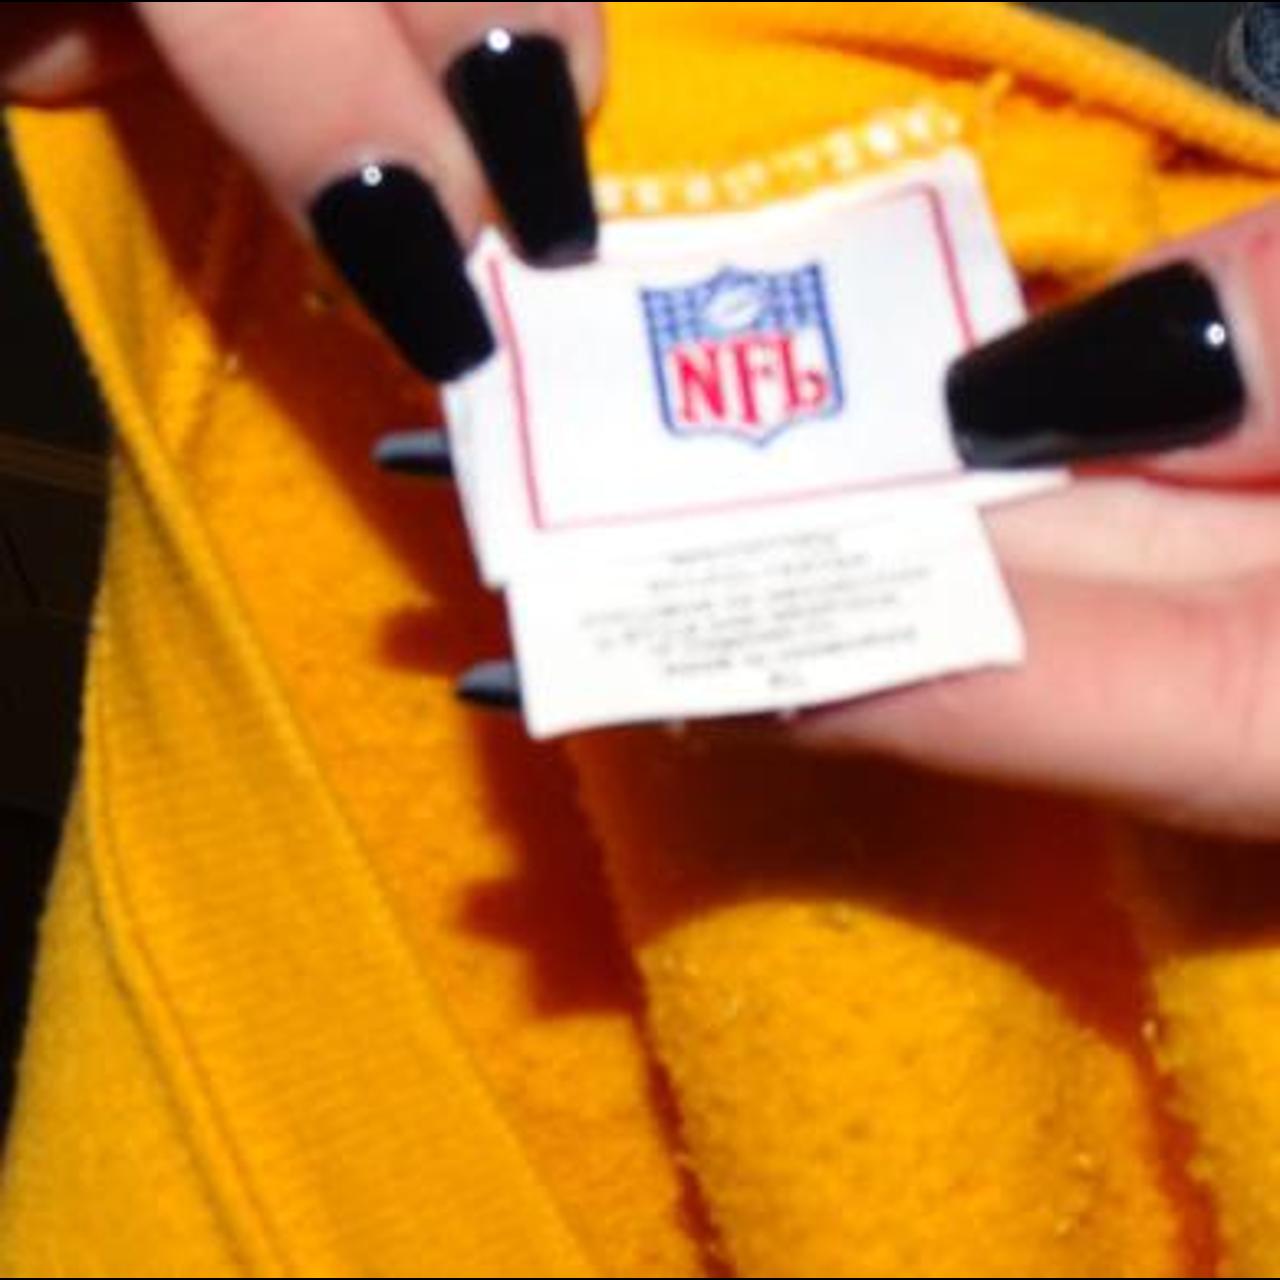 Product Image 3 - vintage sweatshirt 
size:XL
brand:NFL
condition:10/10
model: size medium